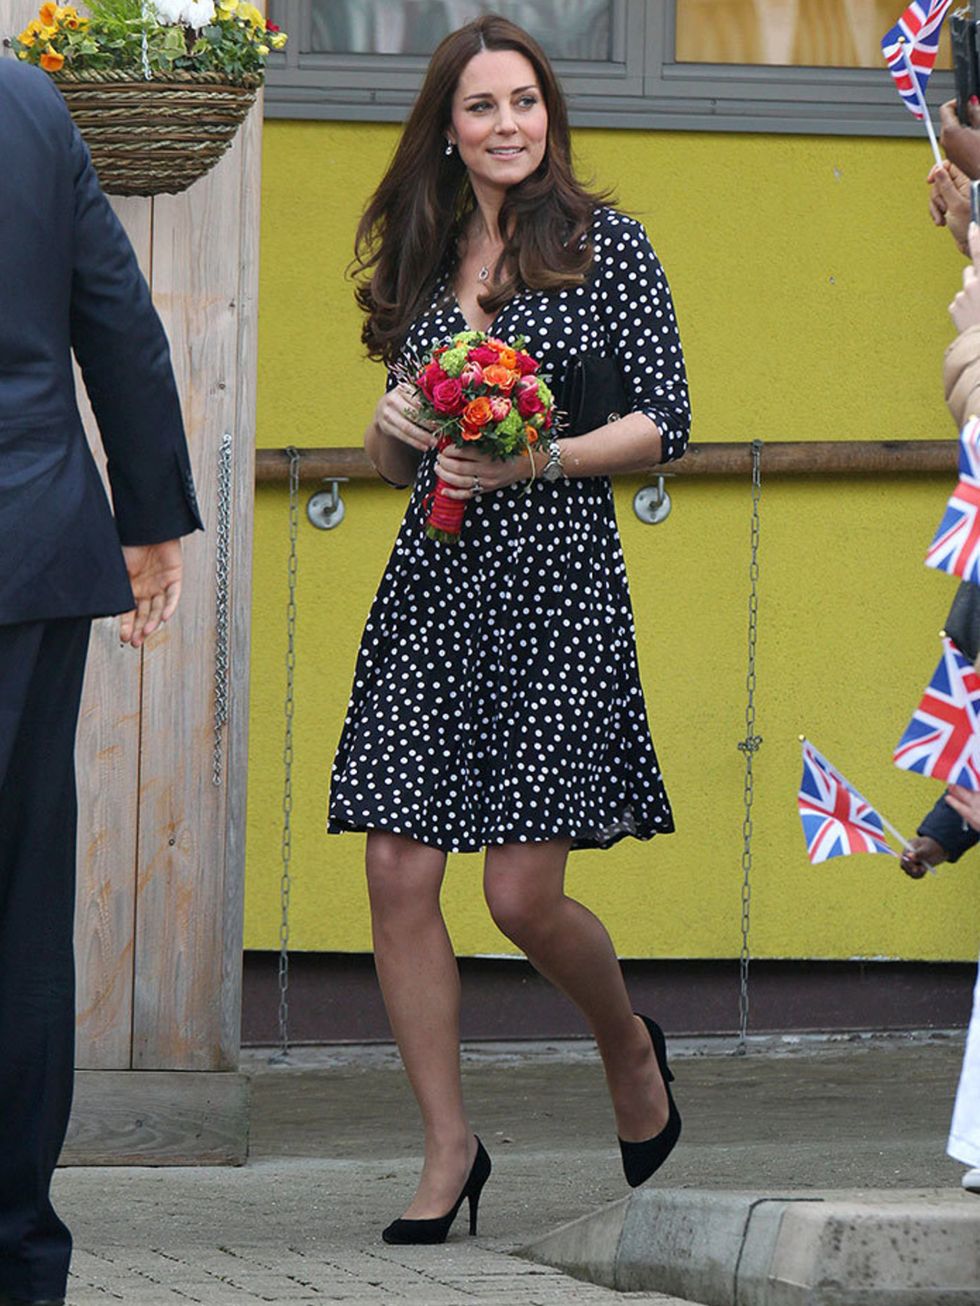 Kate Middleton wearing an ASOS dress whilst on Royal duties, March 2015.